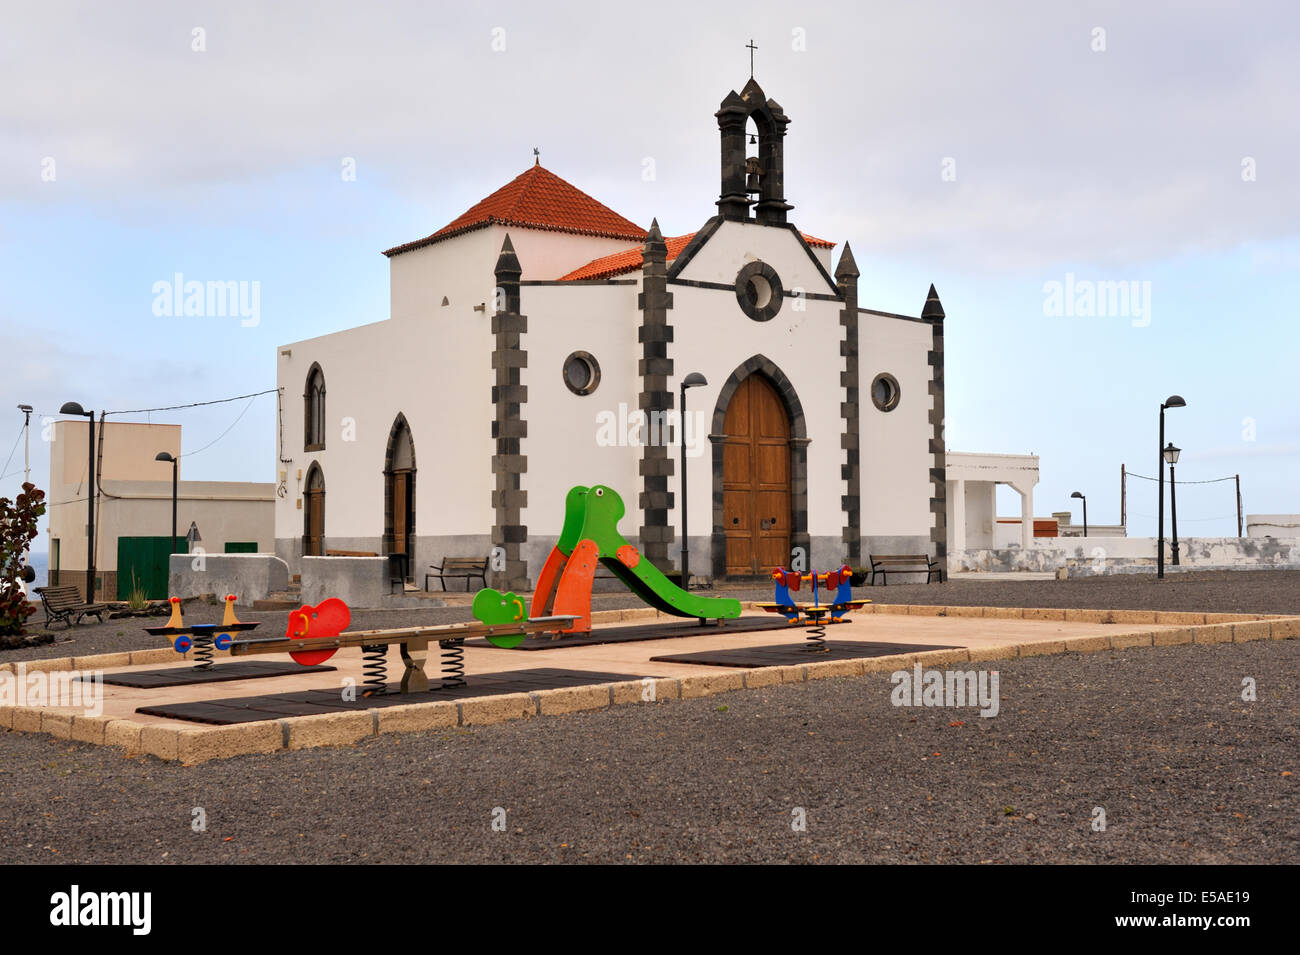 Small church and children’s playground at Poris de Abona, Tenerife Stock Photo